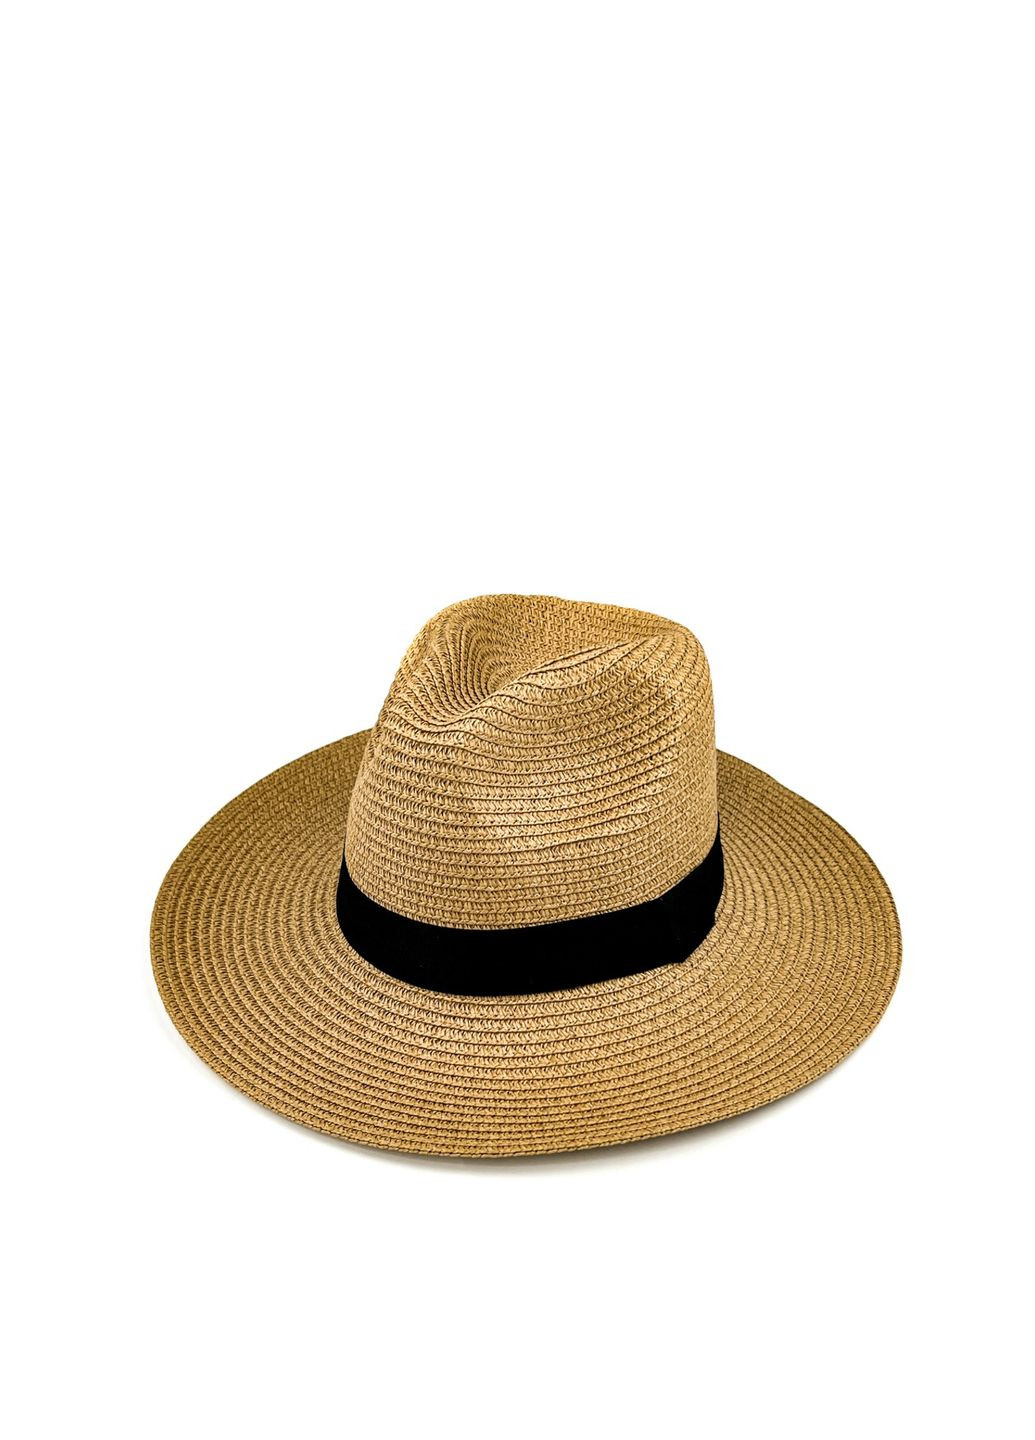 Шляпа федора женская бумага бежевая ТИМИШ LuckyLOOK 470-958 (294977533)